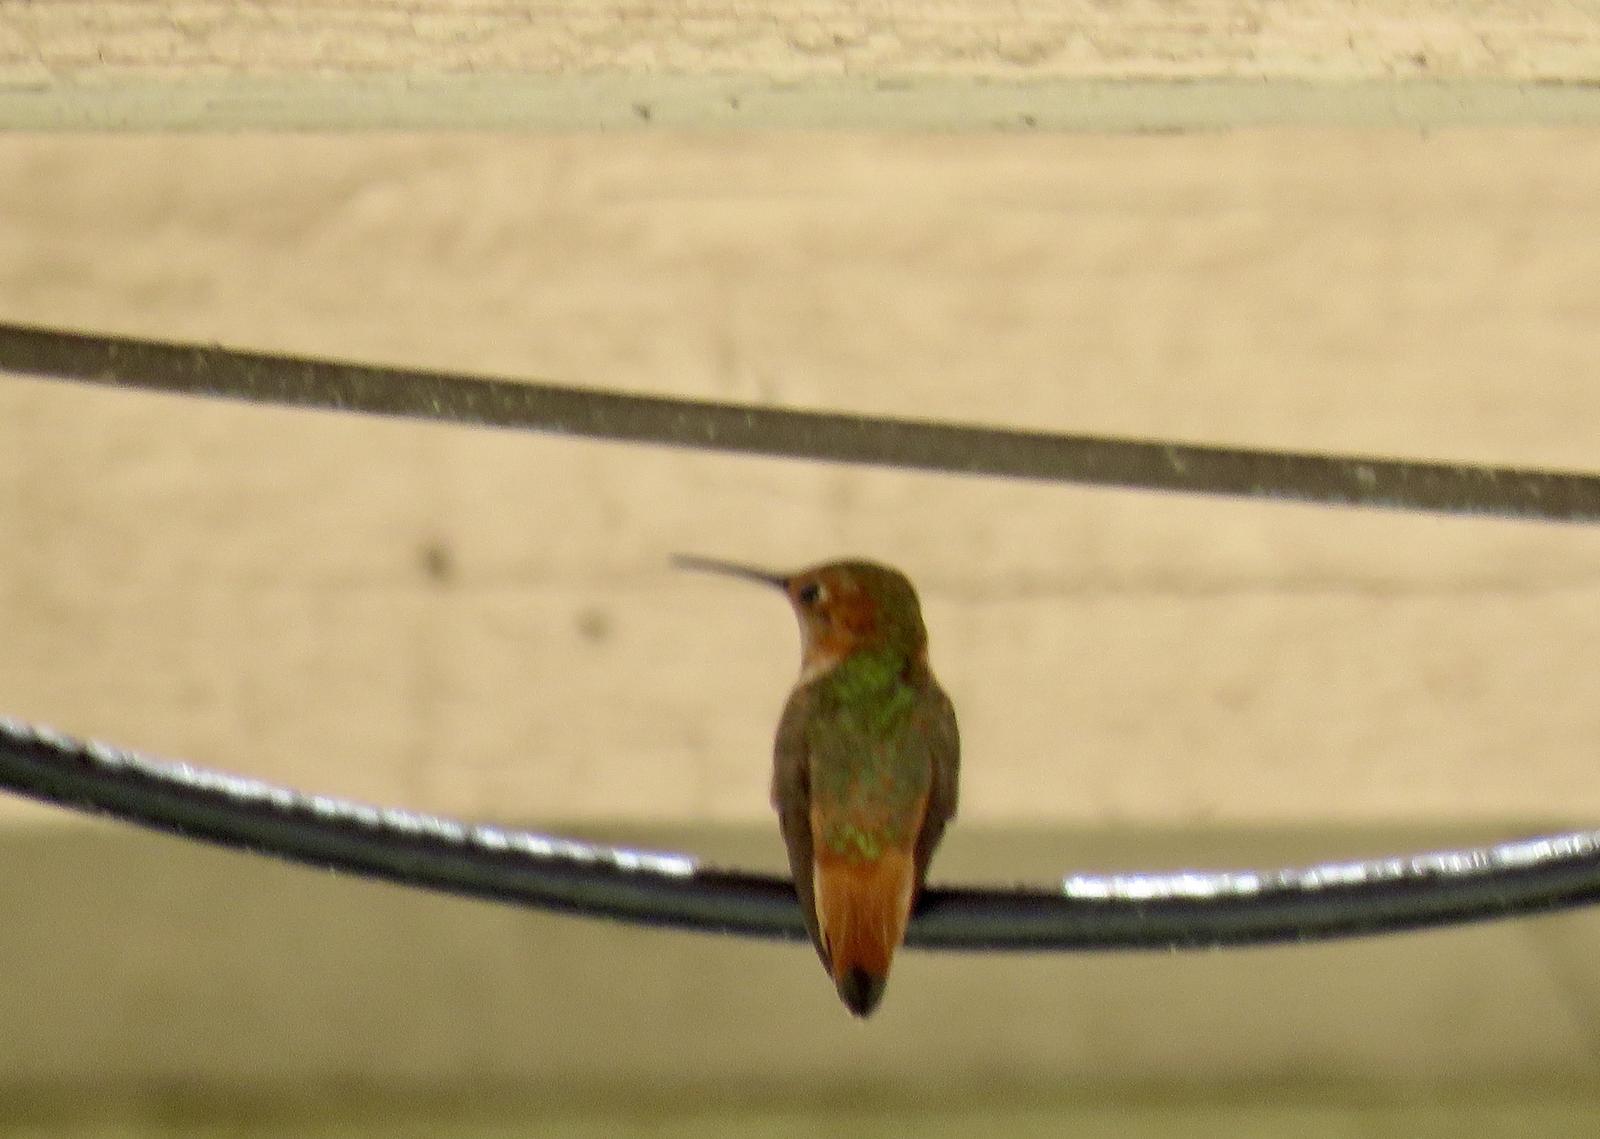 Allen's Hummingbird Photo by Lisa Owens